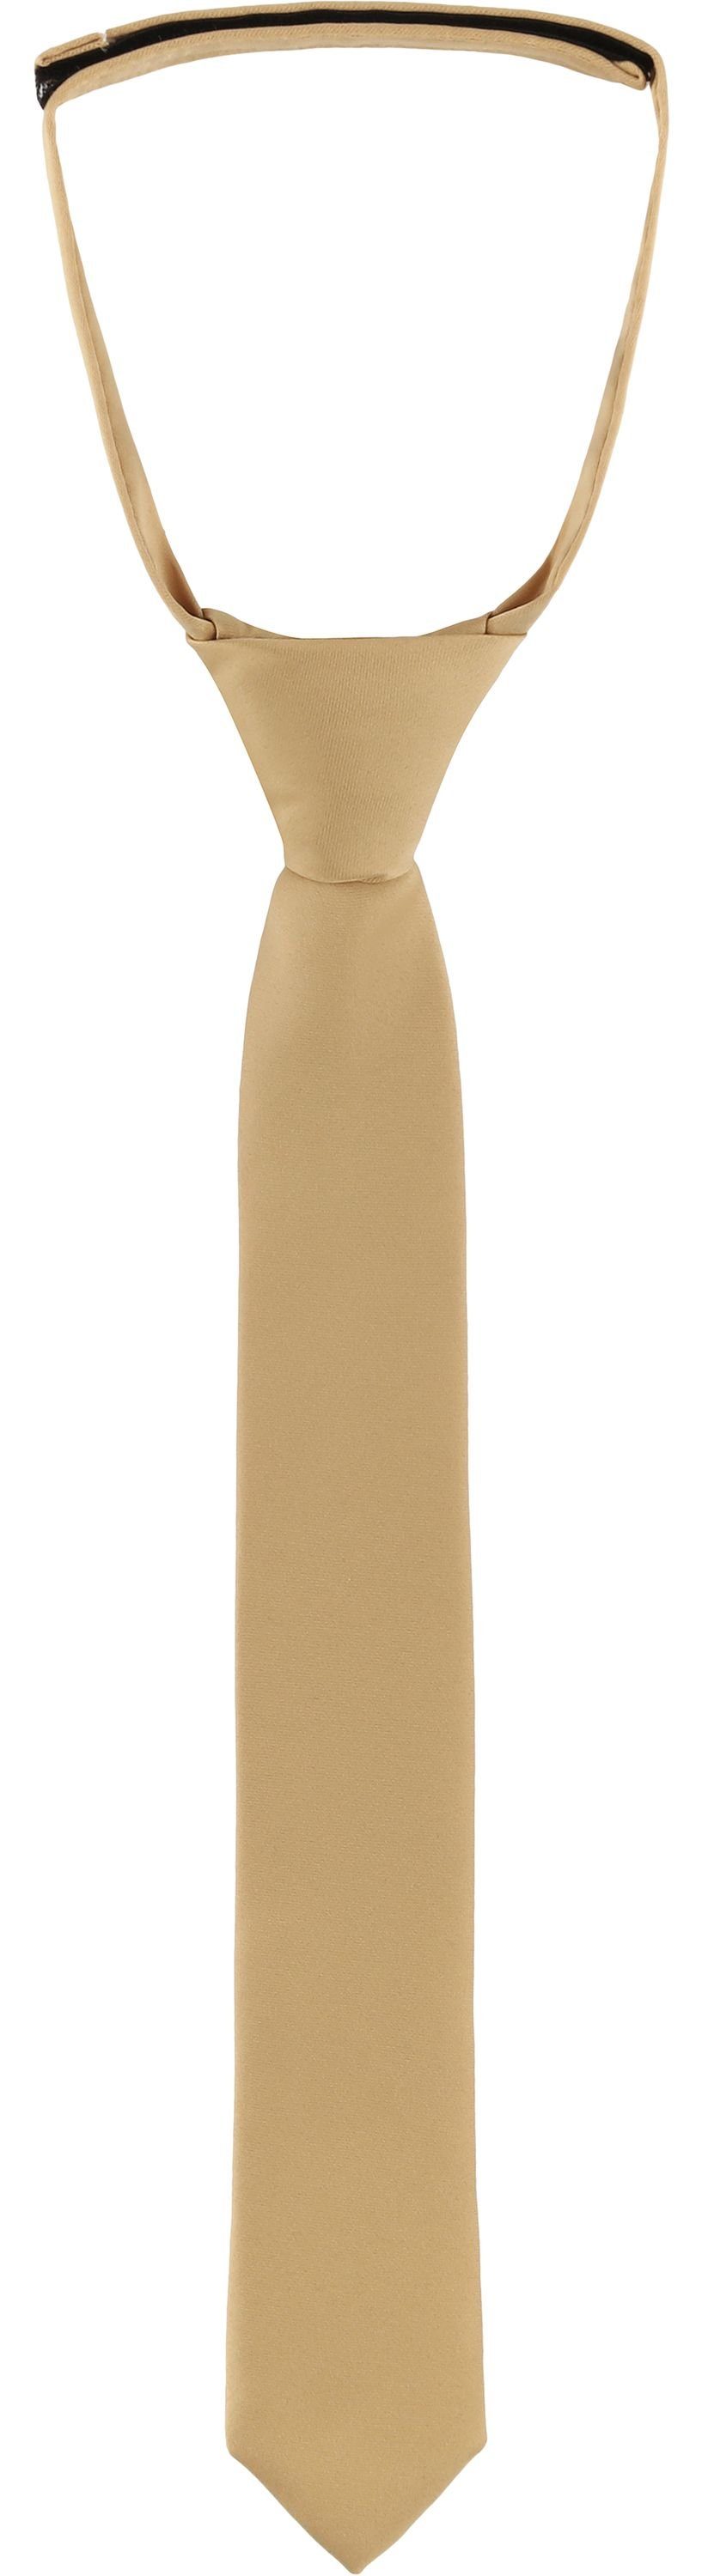 Ladeheid Cravate Enfant Garçon KJ 31cm x 4cm 